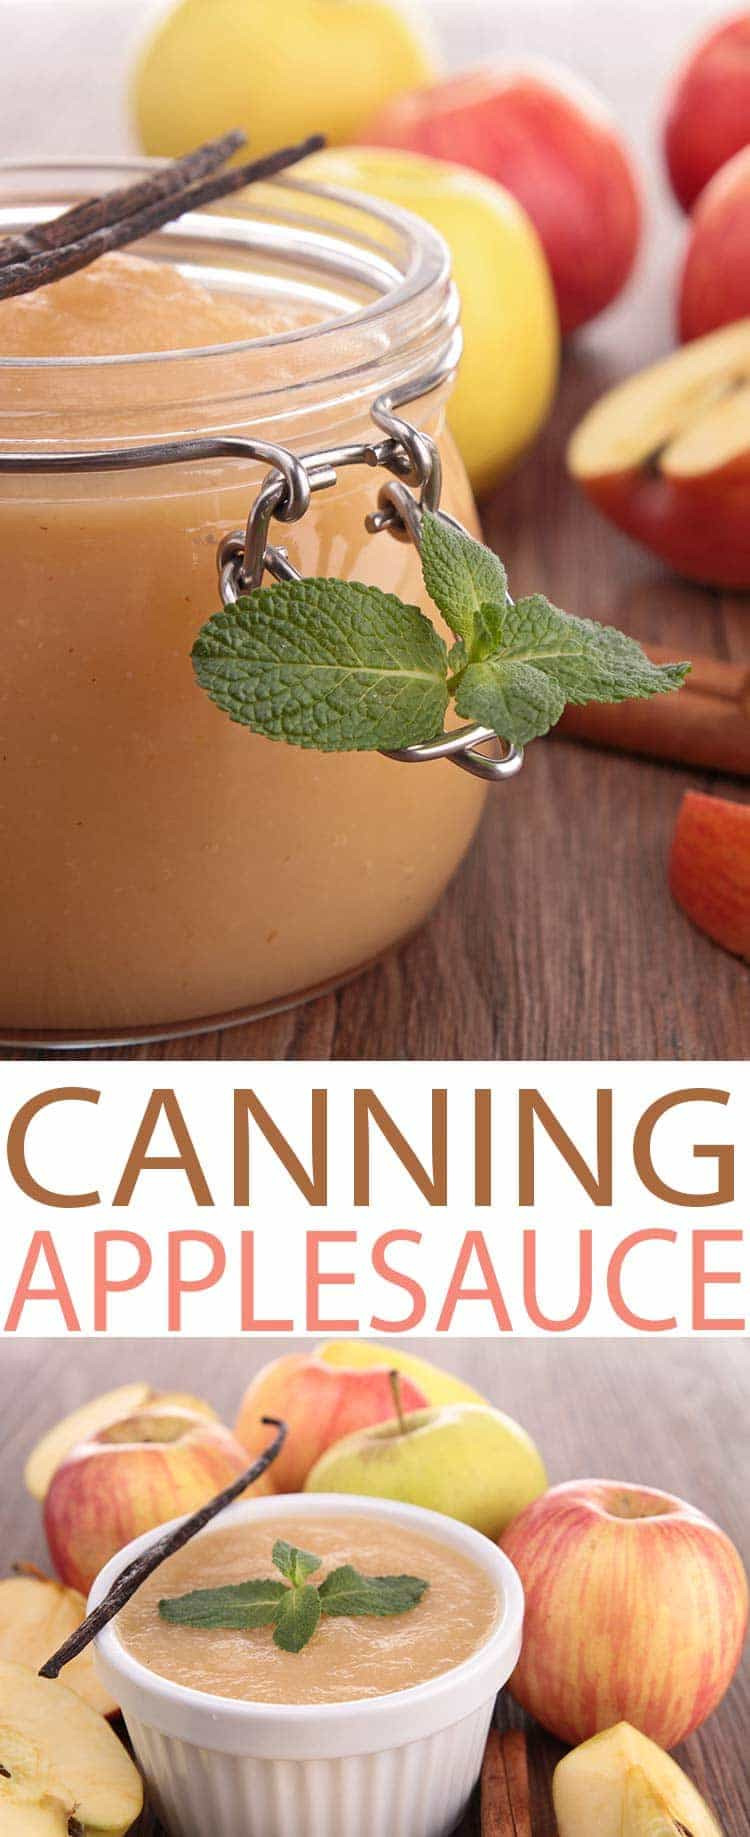 Applesauce Canning Recipe
 Best Applesauce Recipe for Canning